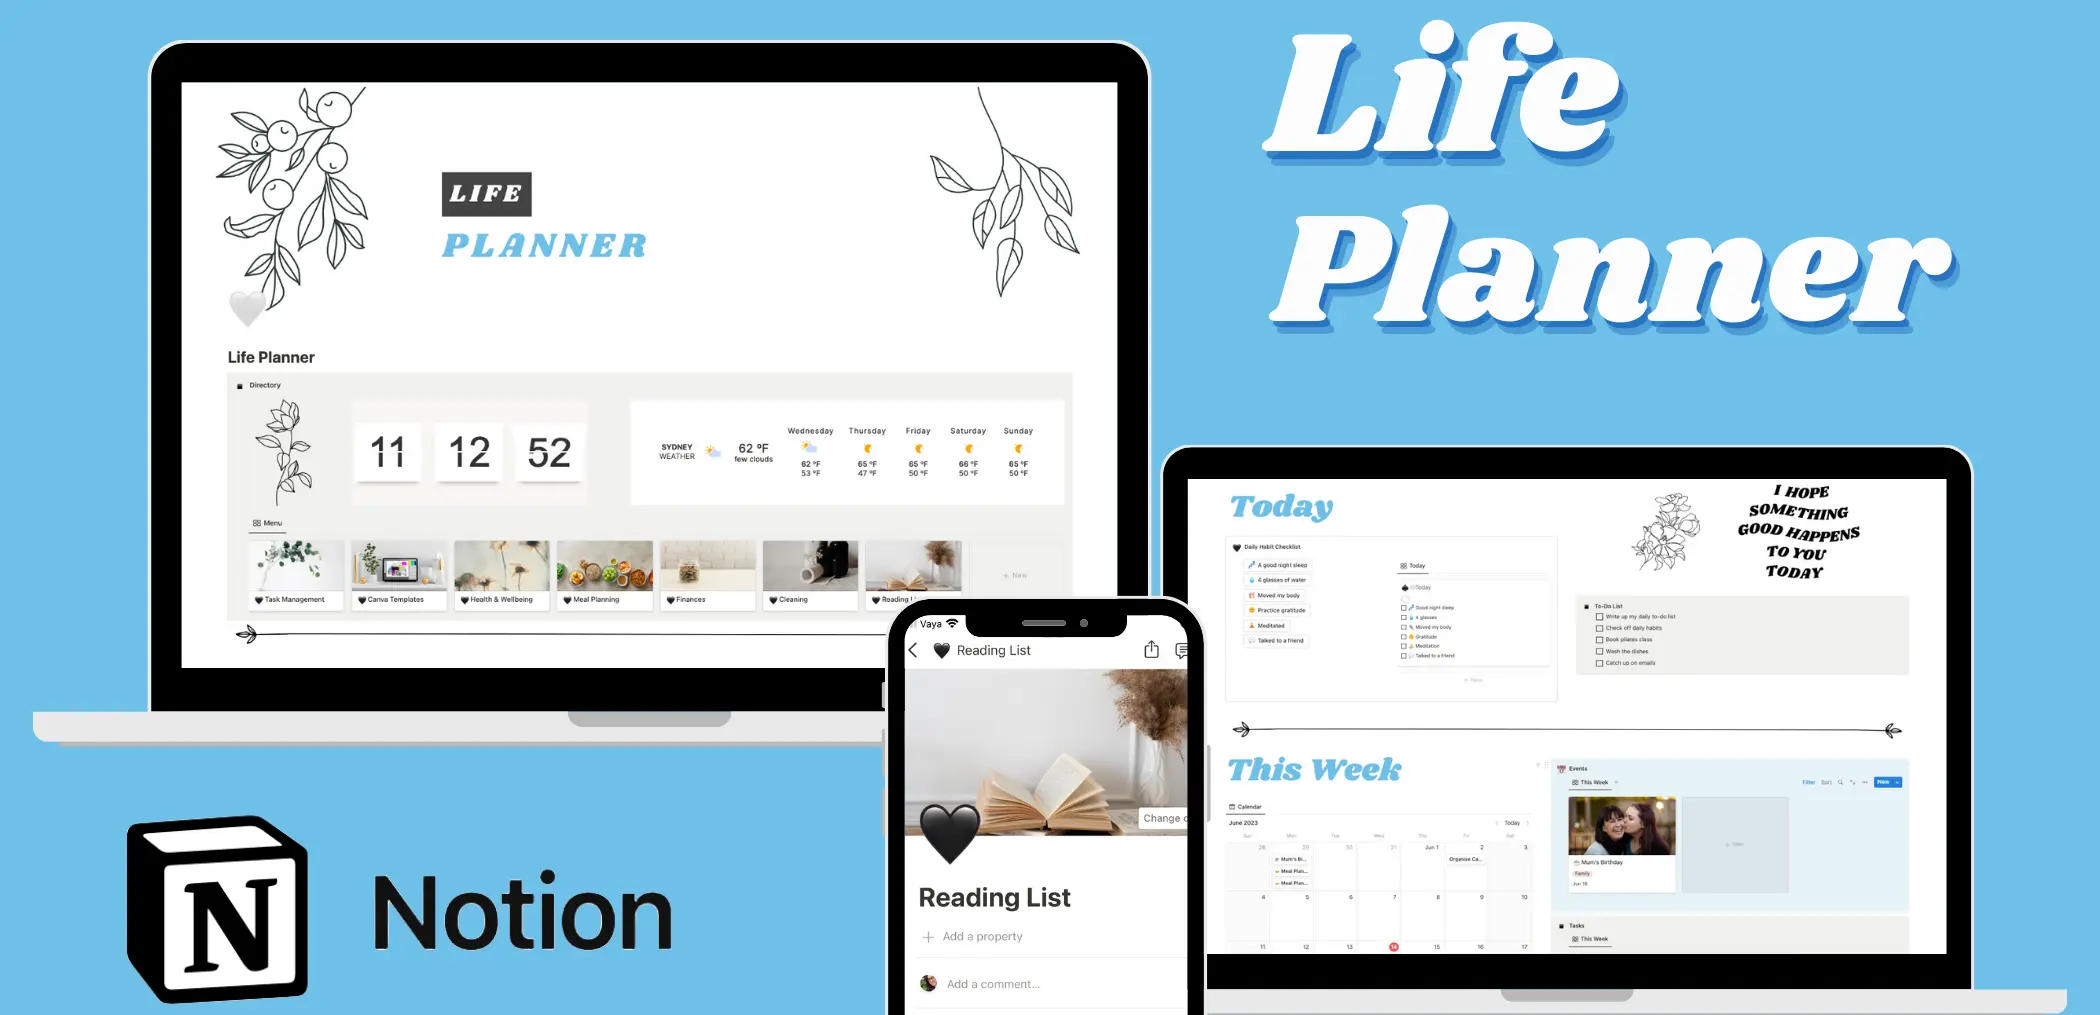 Life Planner Calendar, Tasks, Wellbeing image